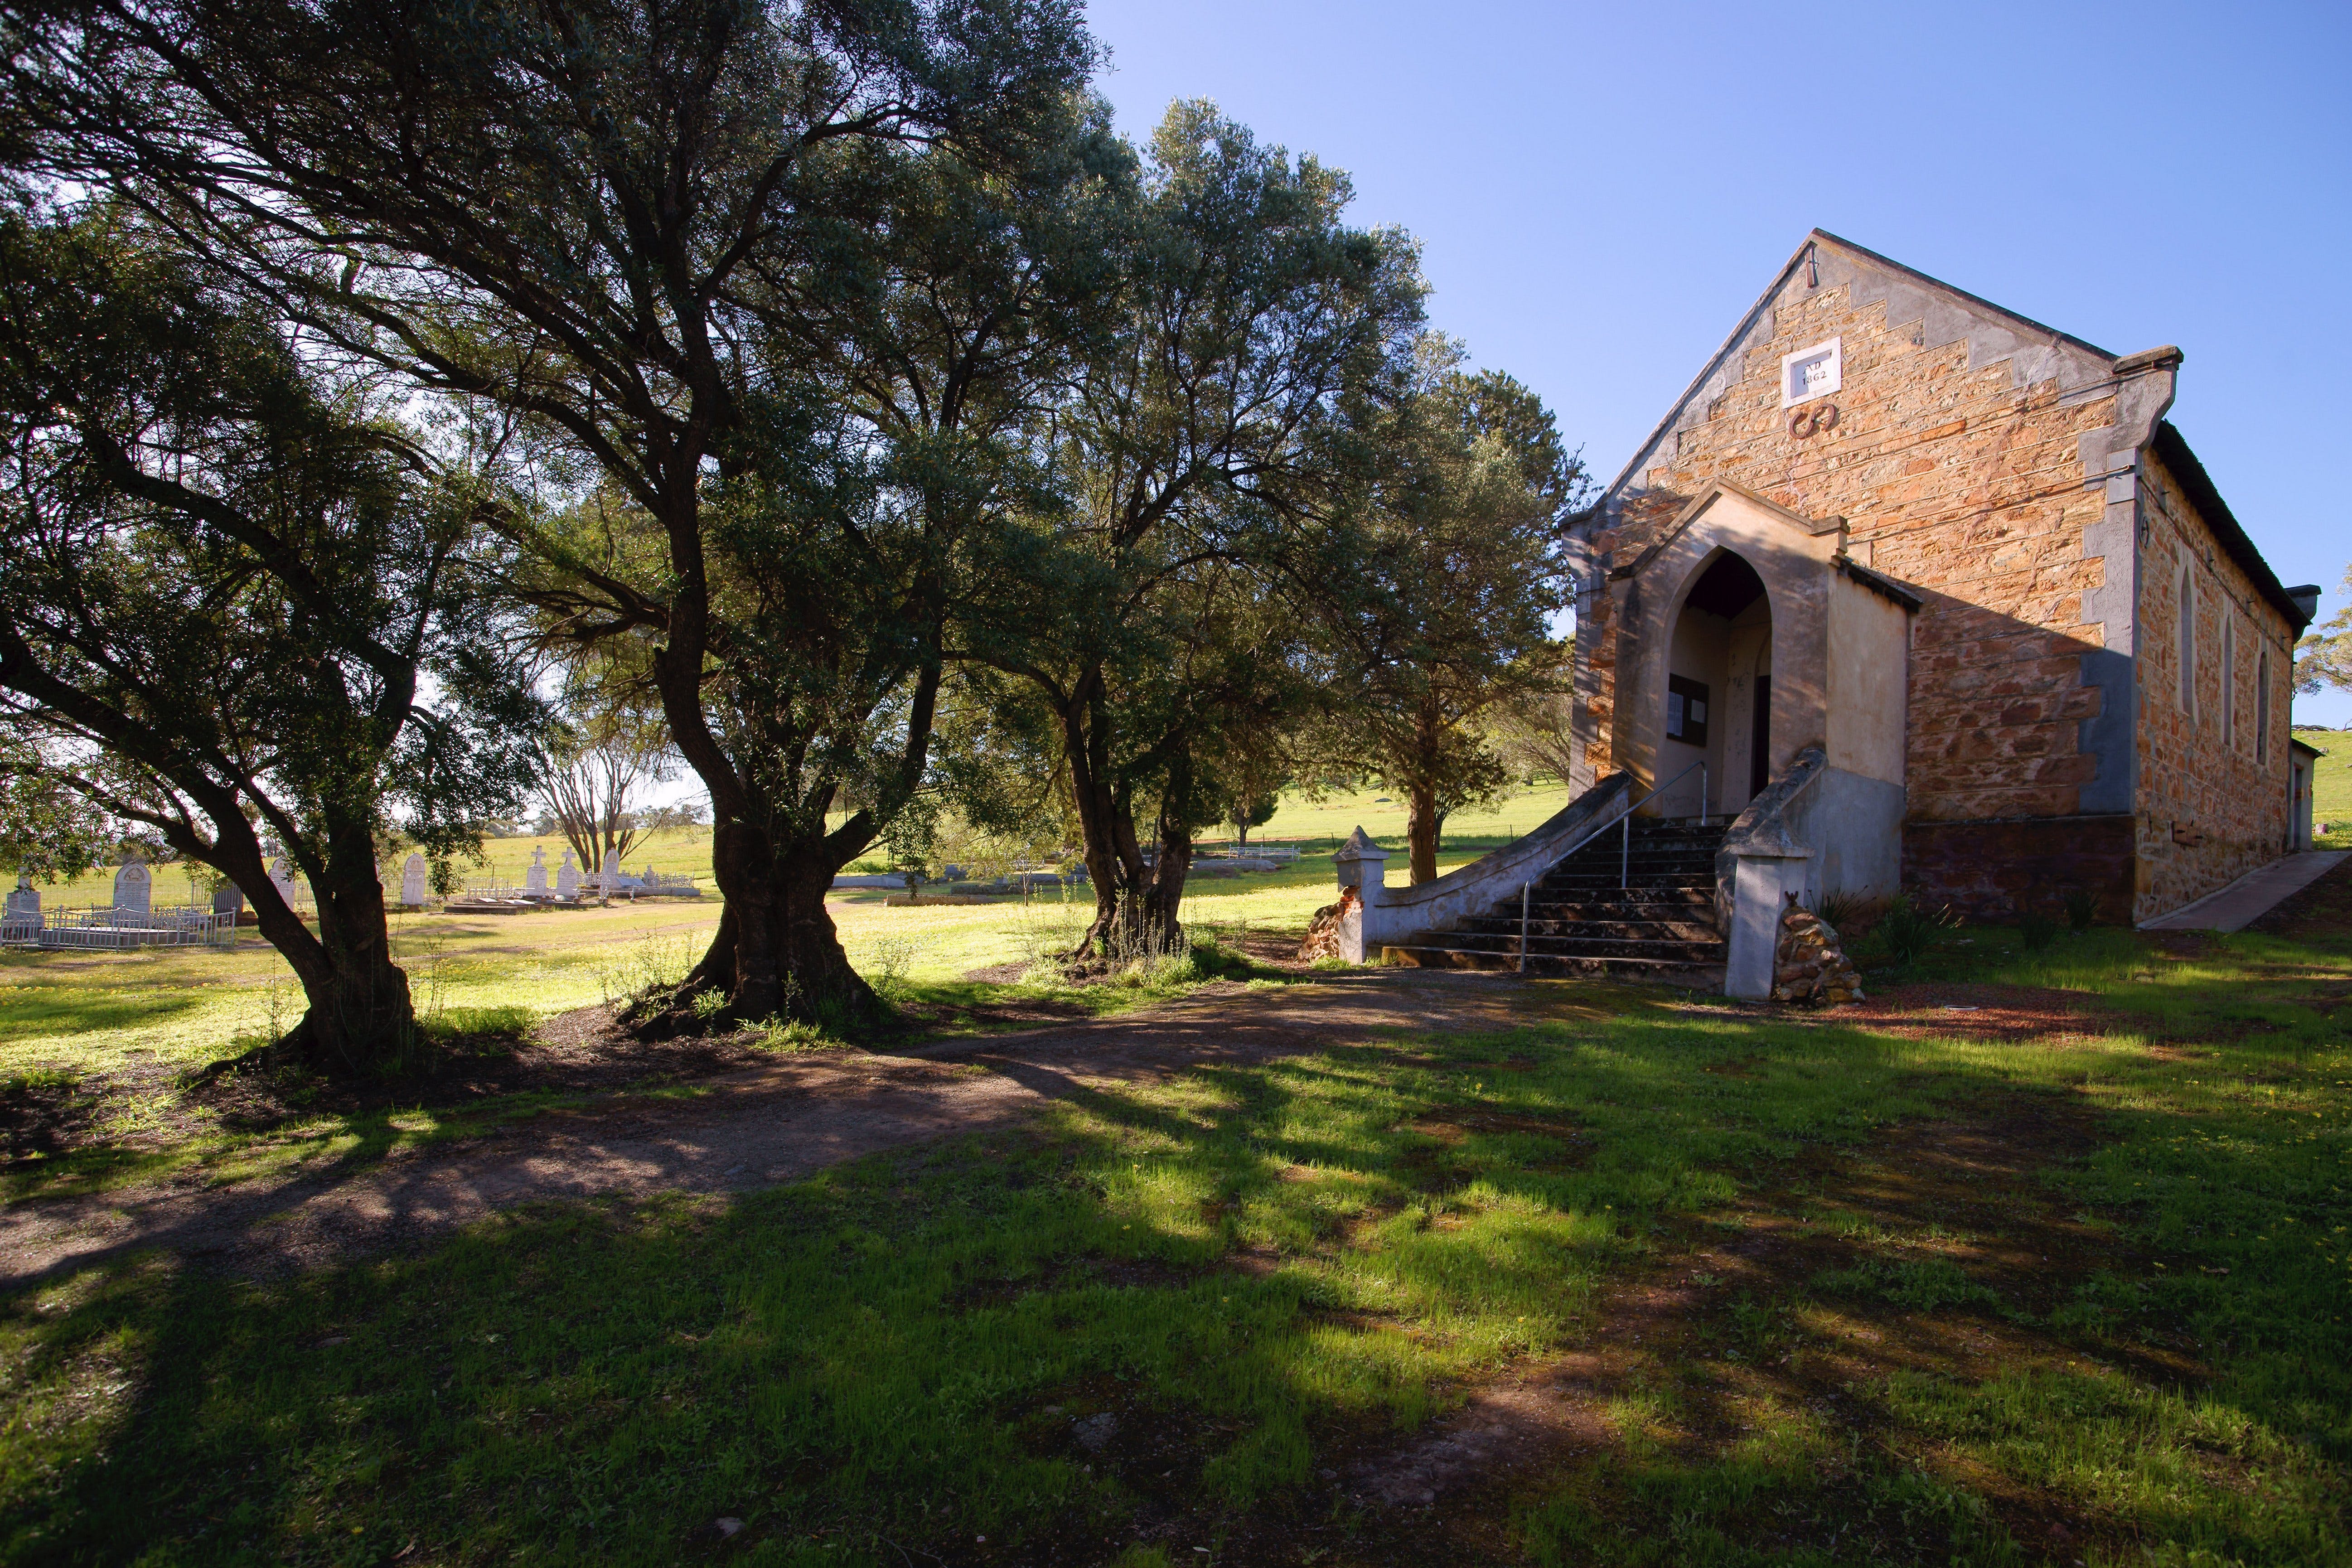 St Saviours Church Katrine - Accommodation Nelson Bay